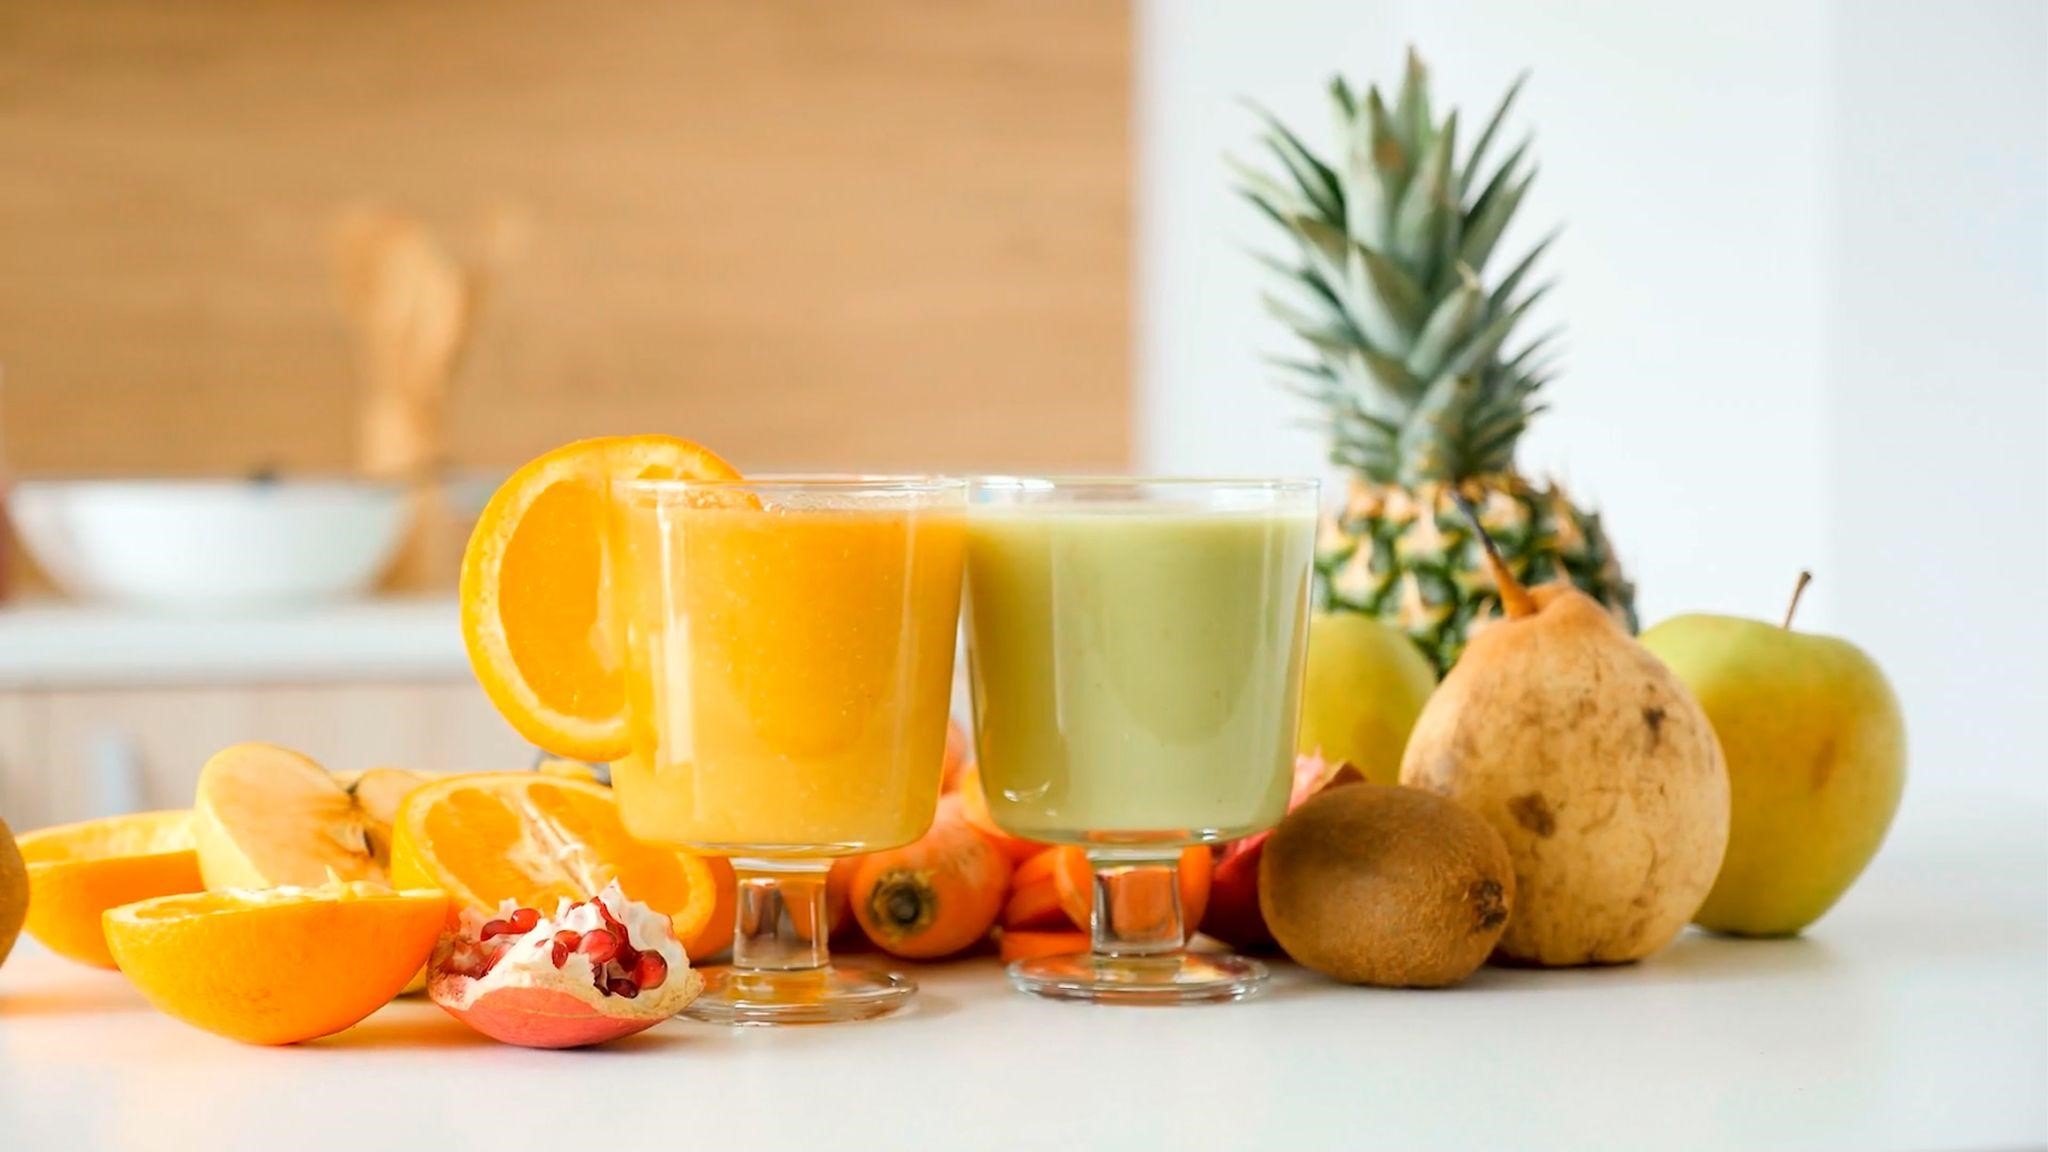  8 Steps to Make Cold-Pressed Orange Juice for the Summer